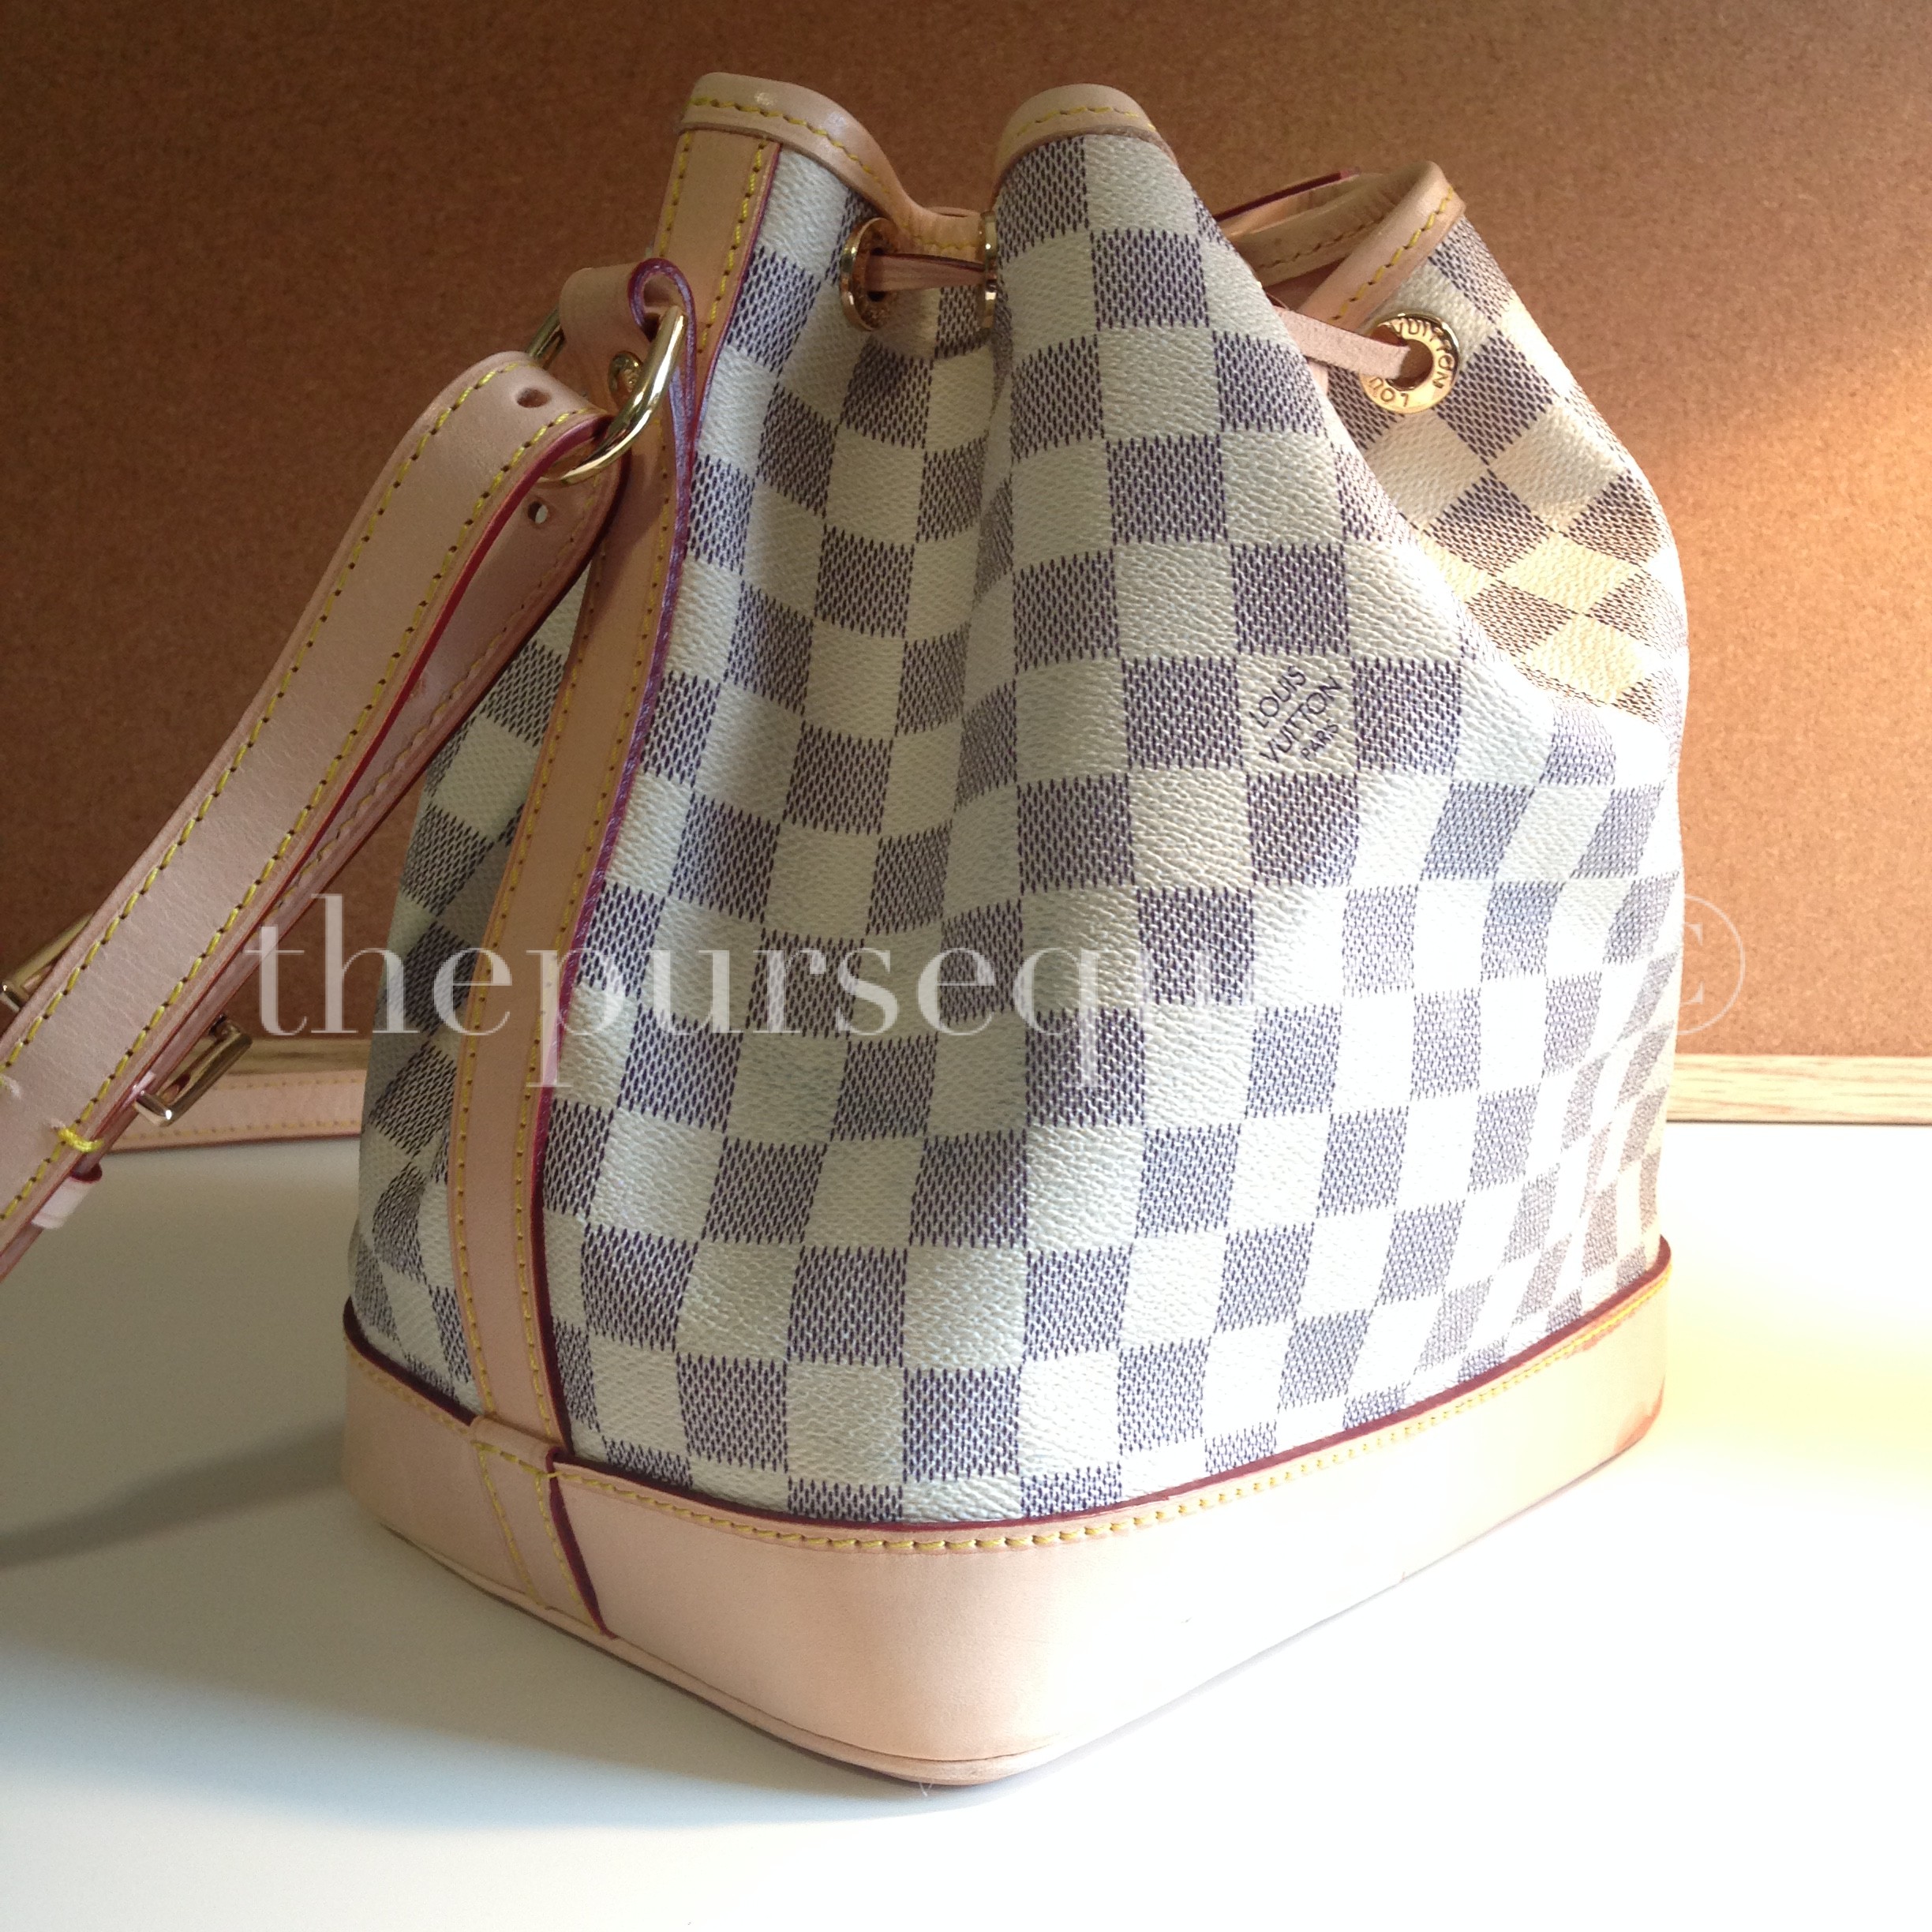 Louis Vuitton Noe BB Replica Review - Authentic & Replica Bags/Handbags Reviews by thepursequeen